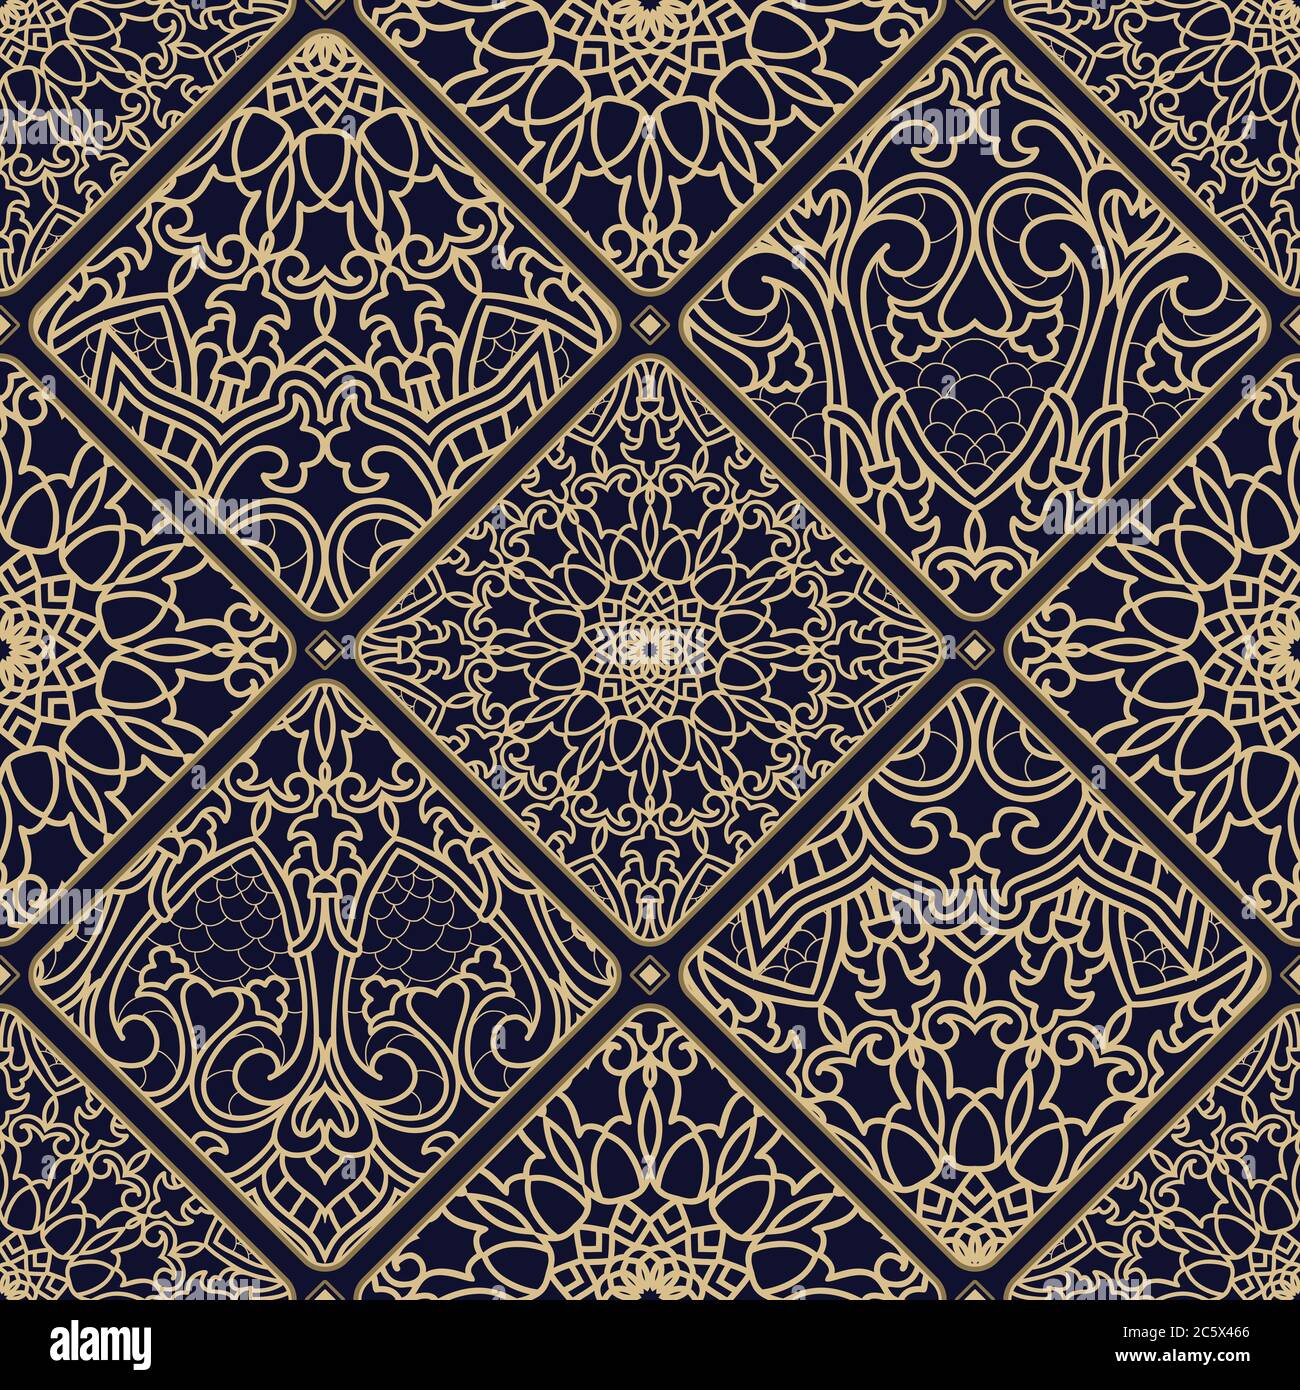 islamic art wallpaper black